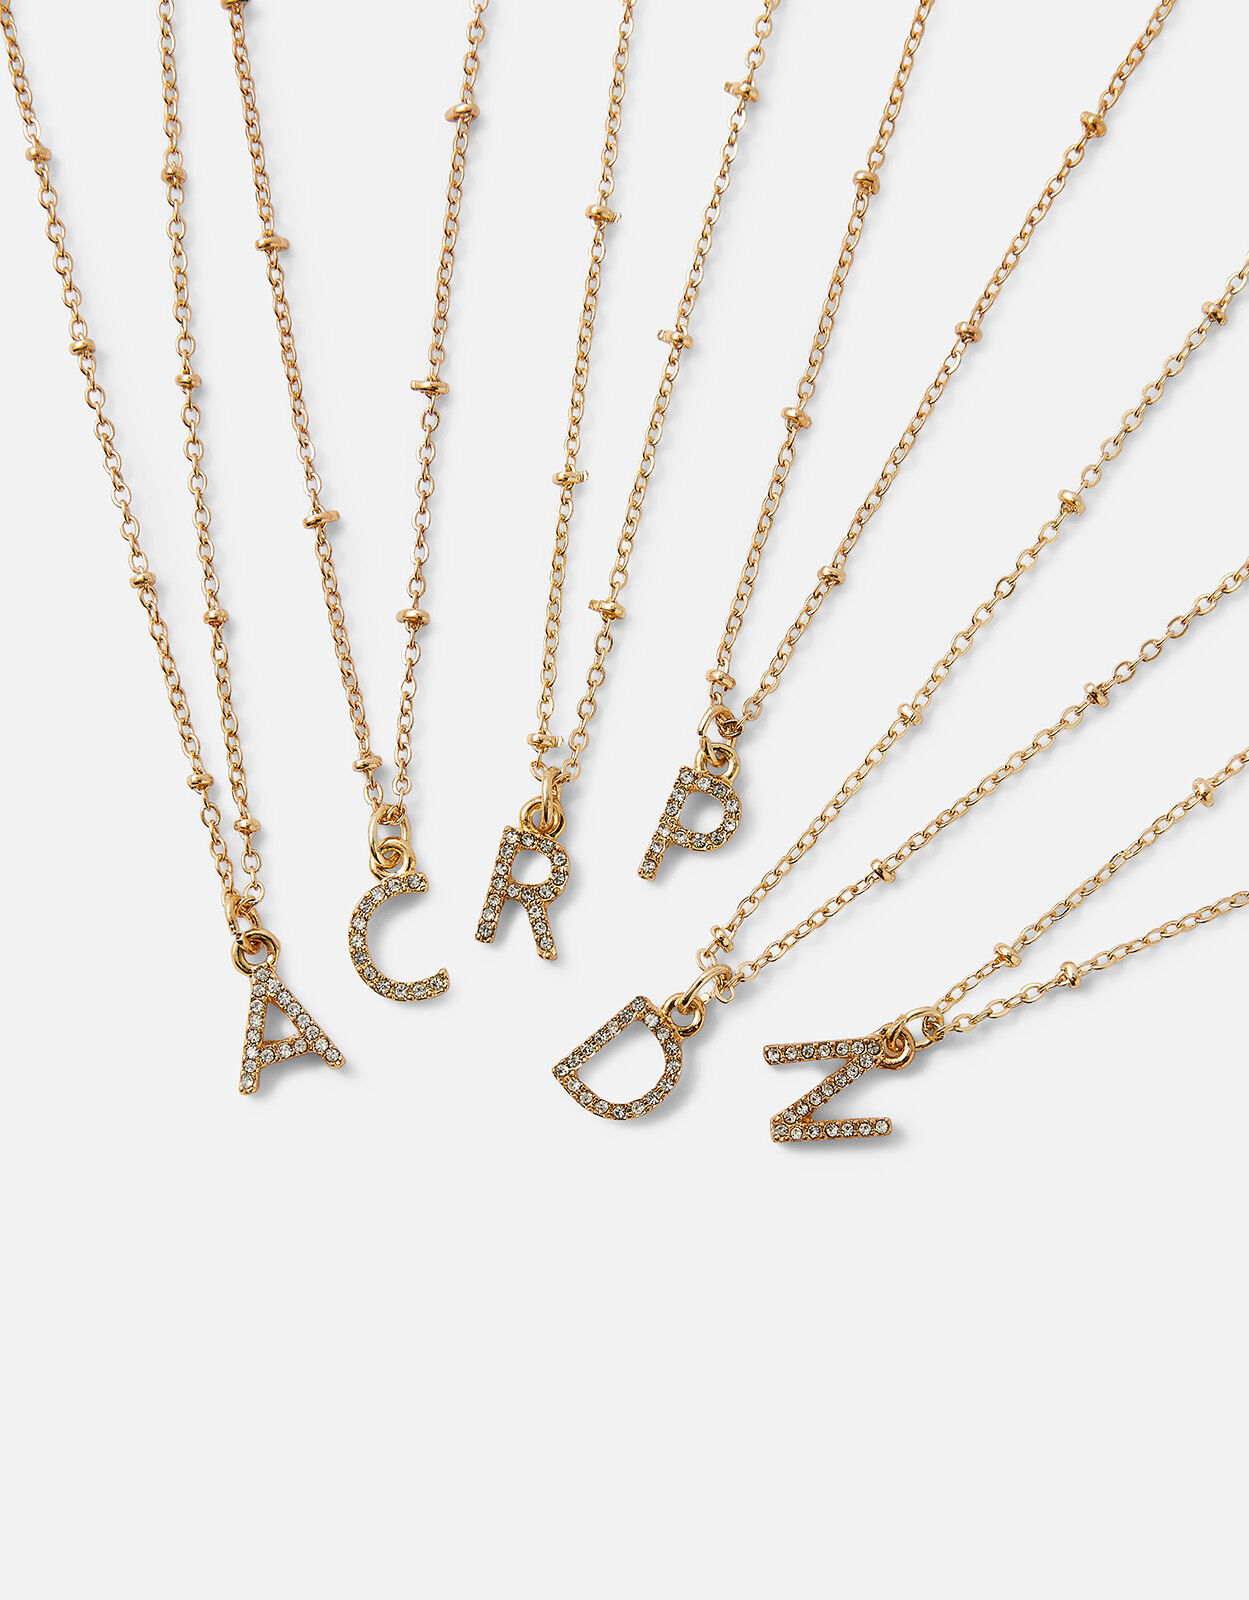 Gold Vermeil Initial Pendant Necklace - C | Z for Accessorize | Accessorize  Global